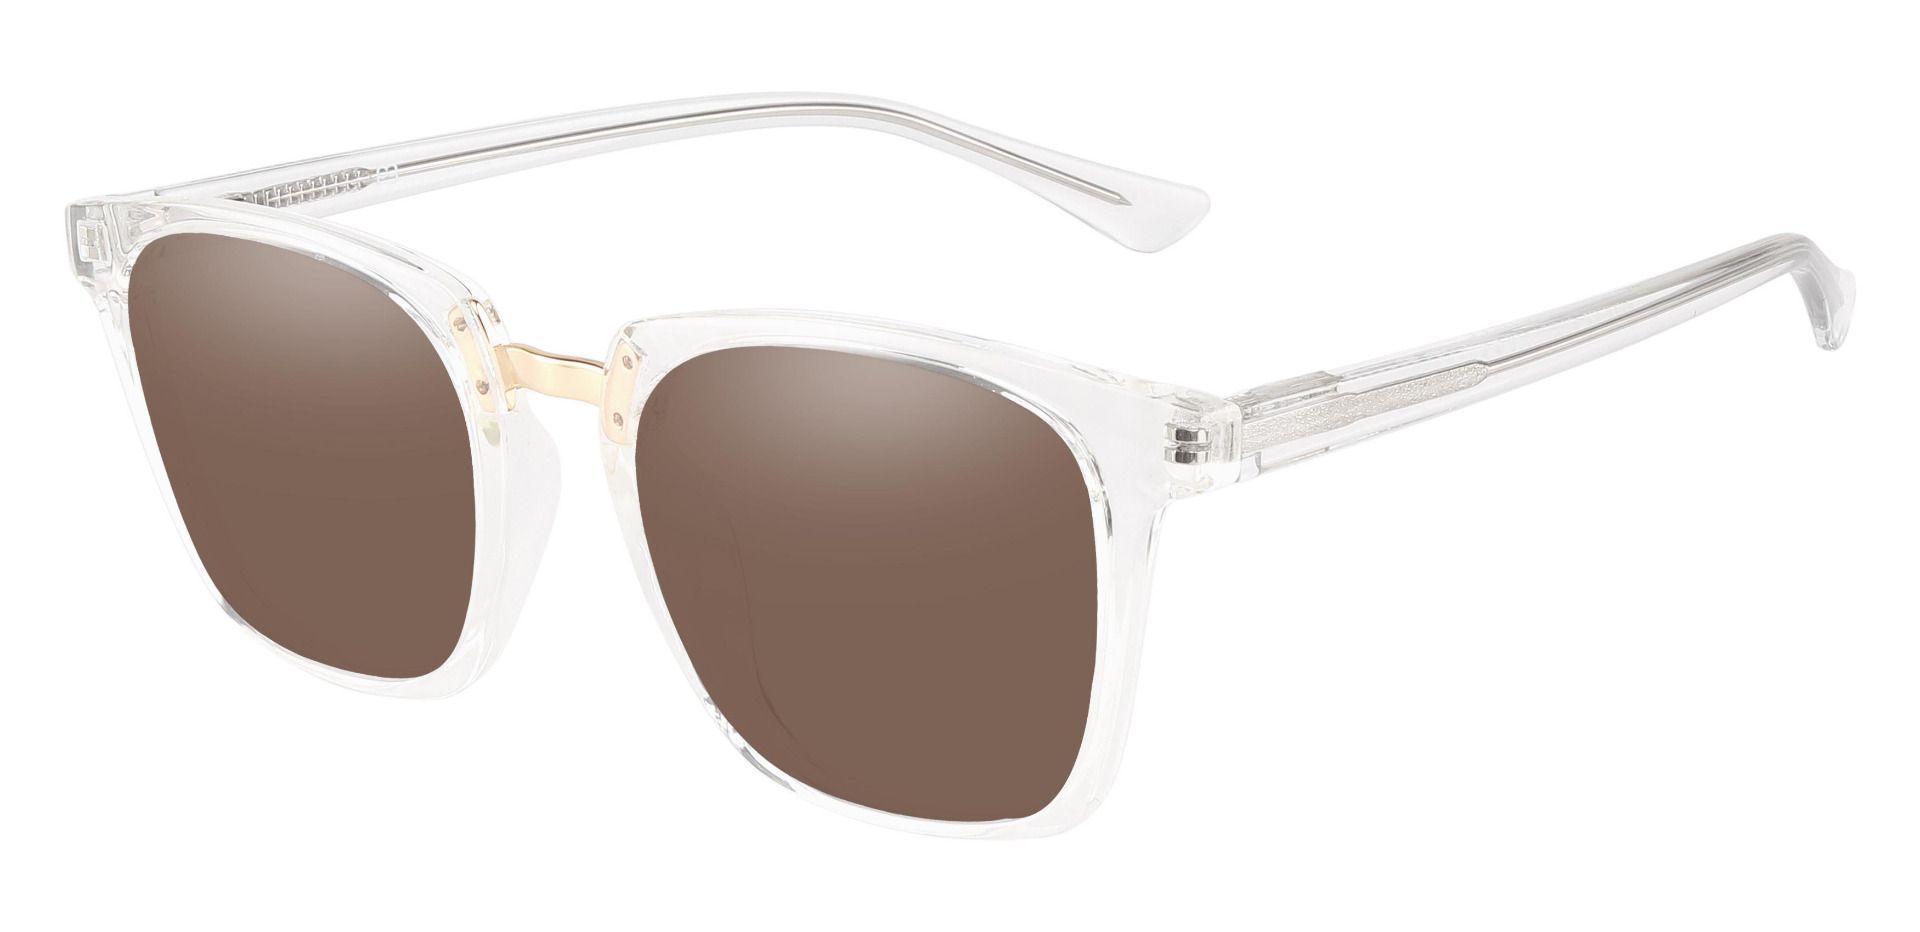 Delta Square Progressive Sunglasses - Clear Frame With Brown Lenses